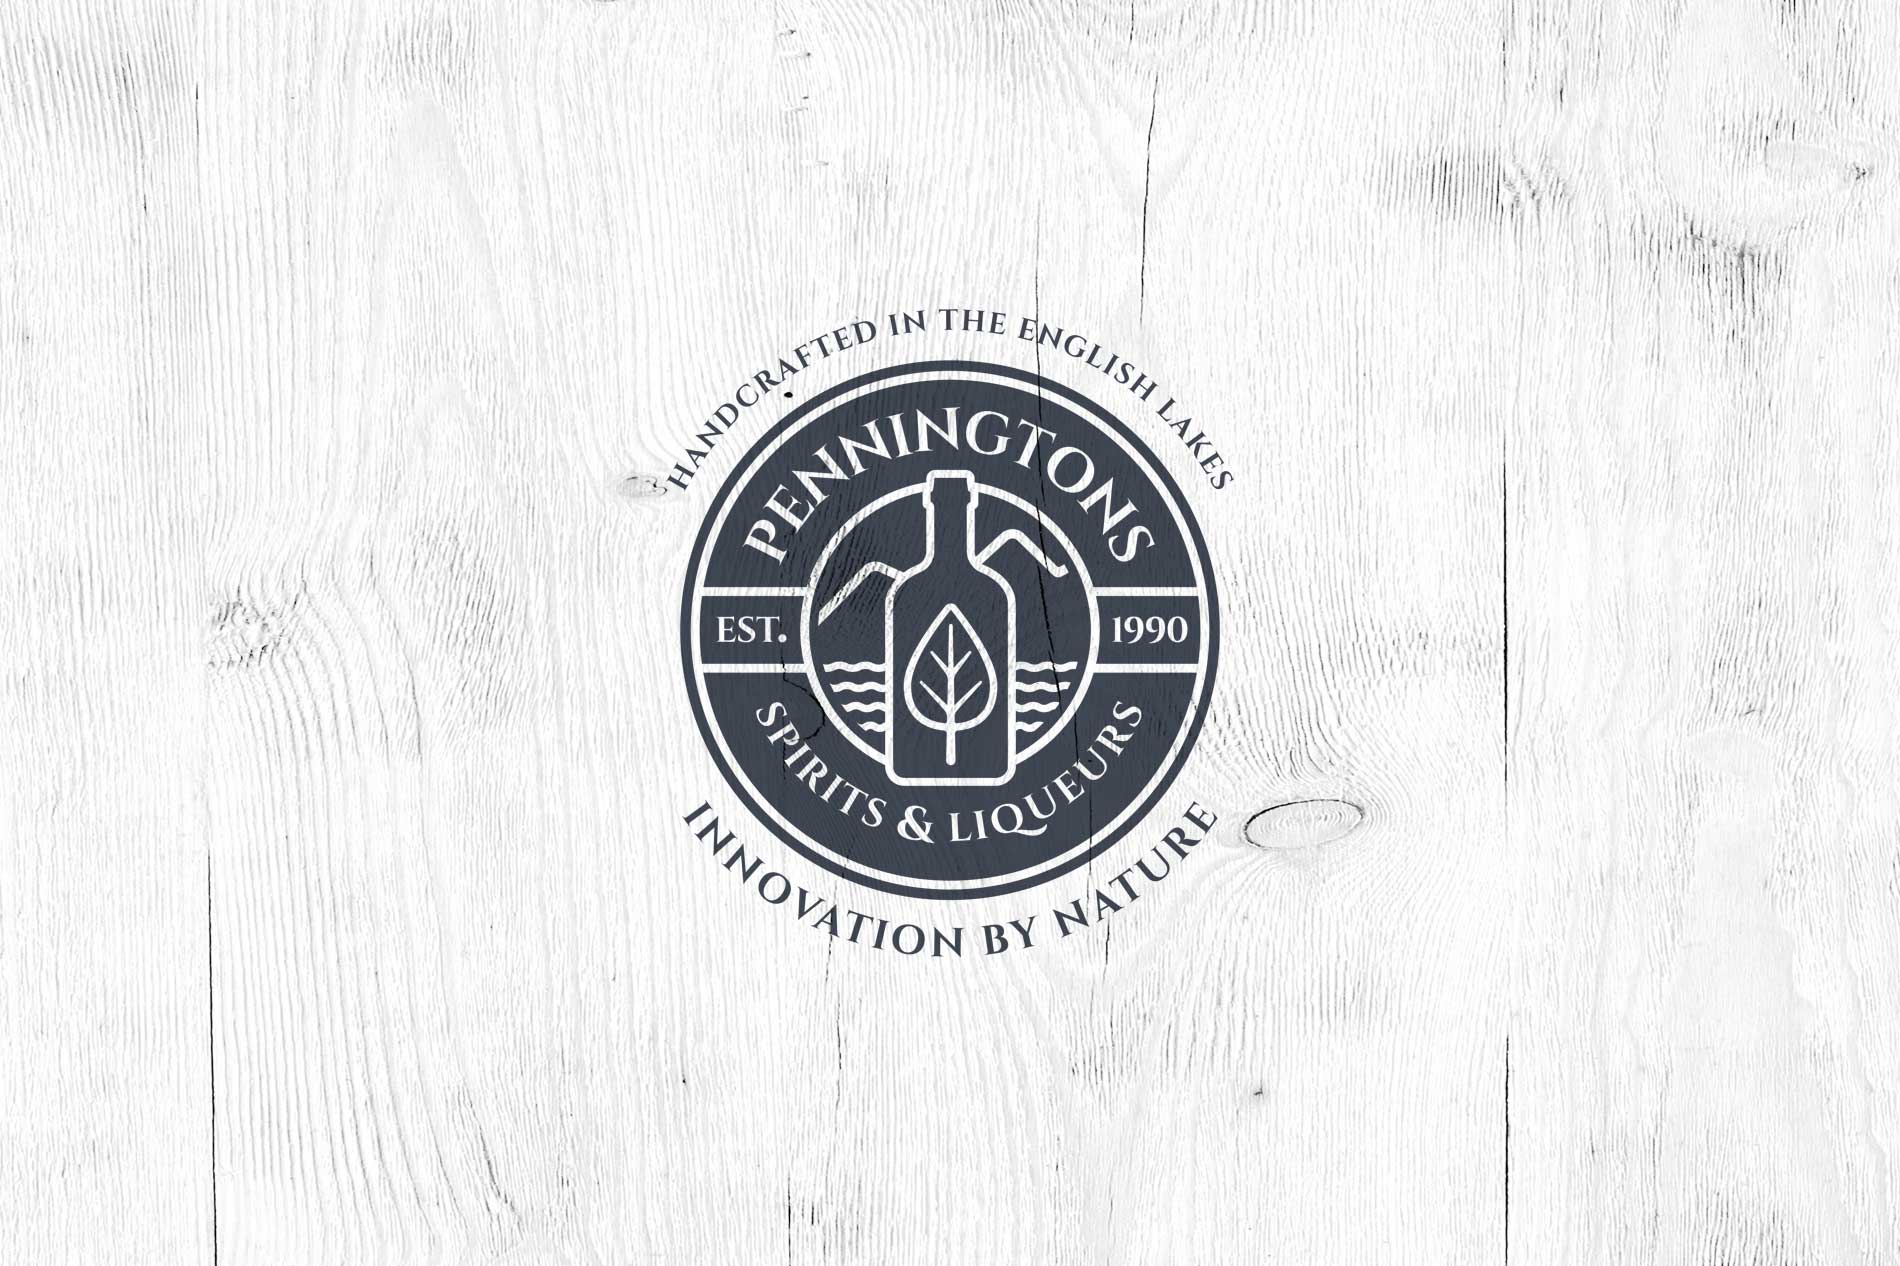 Penningtons Brand Logo and Packaging Design